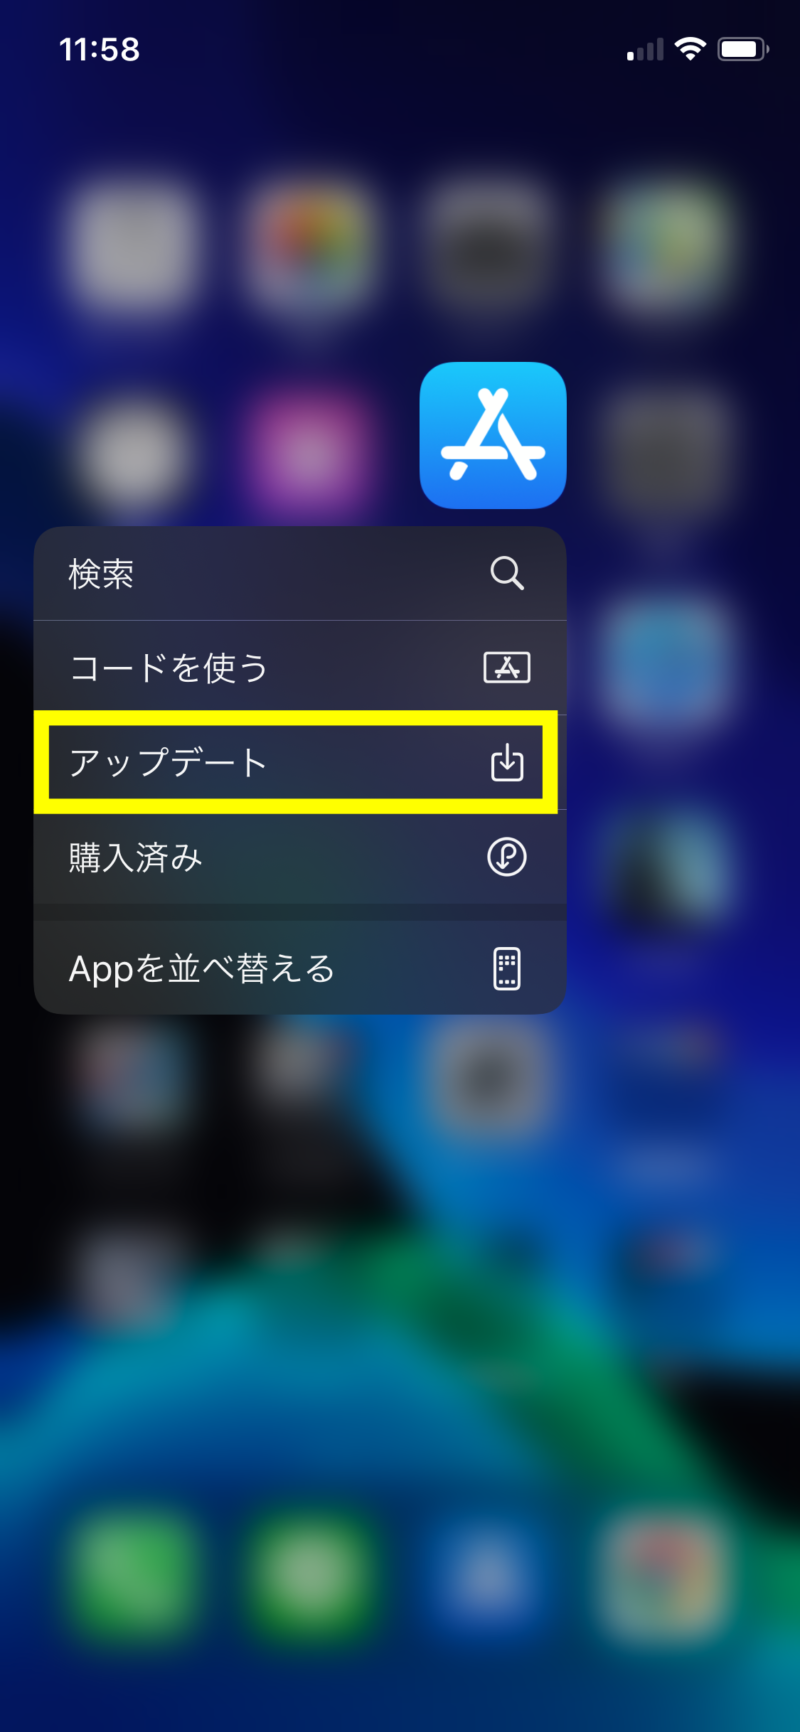 Ios 13 Iphoneアプリをアップデート 更新する方法 スマホアプリライフ